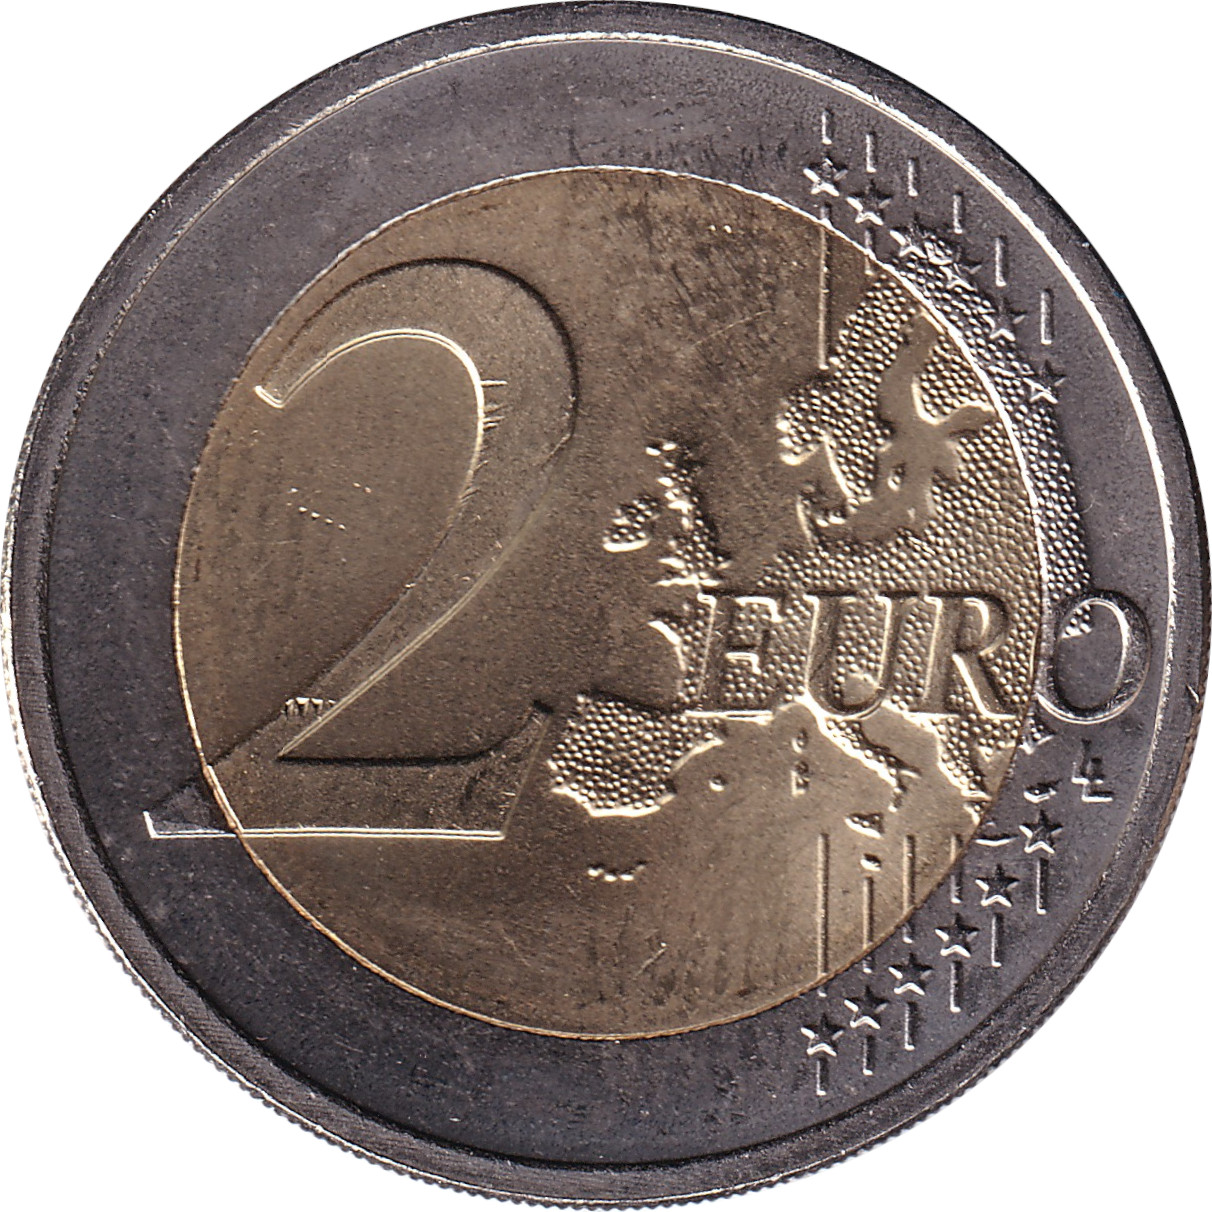 2 euro - Volontaires - 50 ans